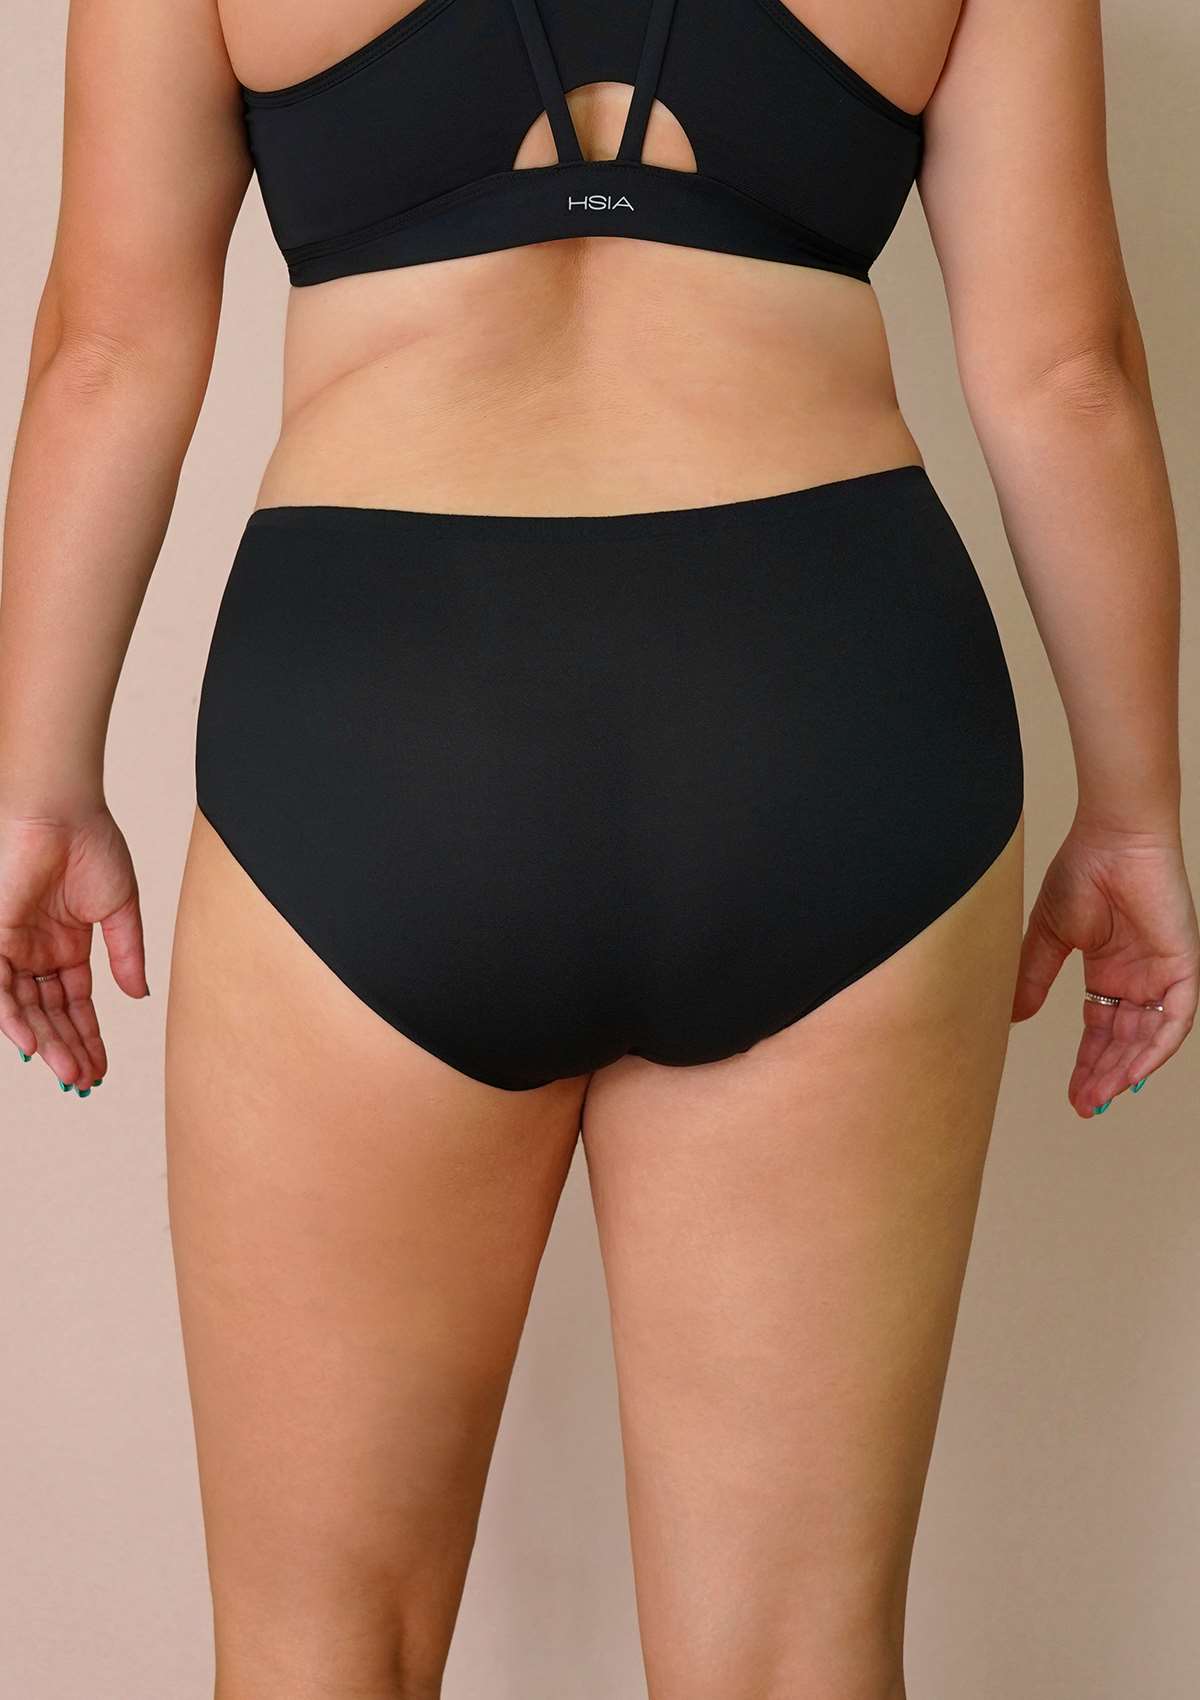 HSIA FlexiFit Soft Stretch Seamless Brief Underwear Bundle - 5 Packs/$20 / L-2XL / 3*Black+2*Peach Beige